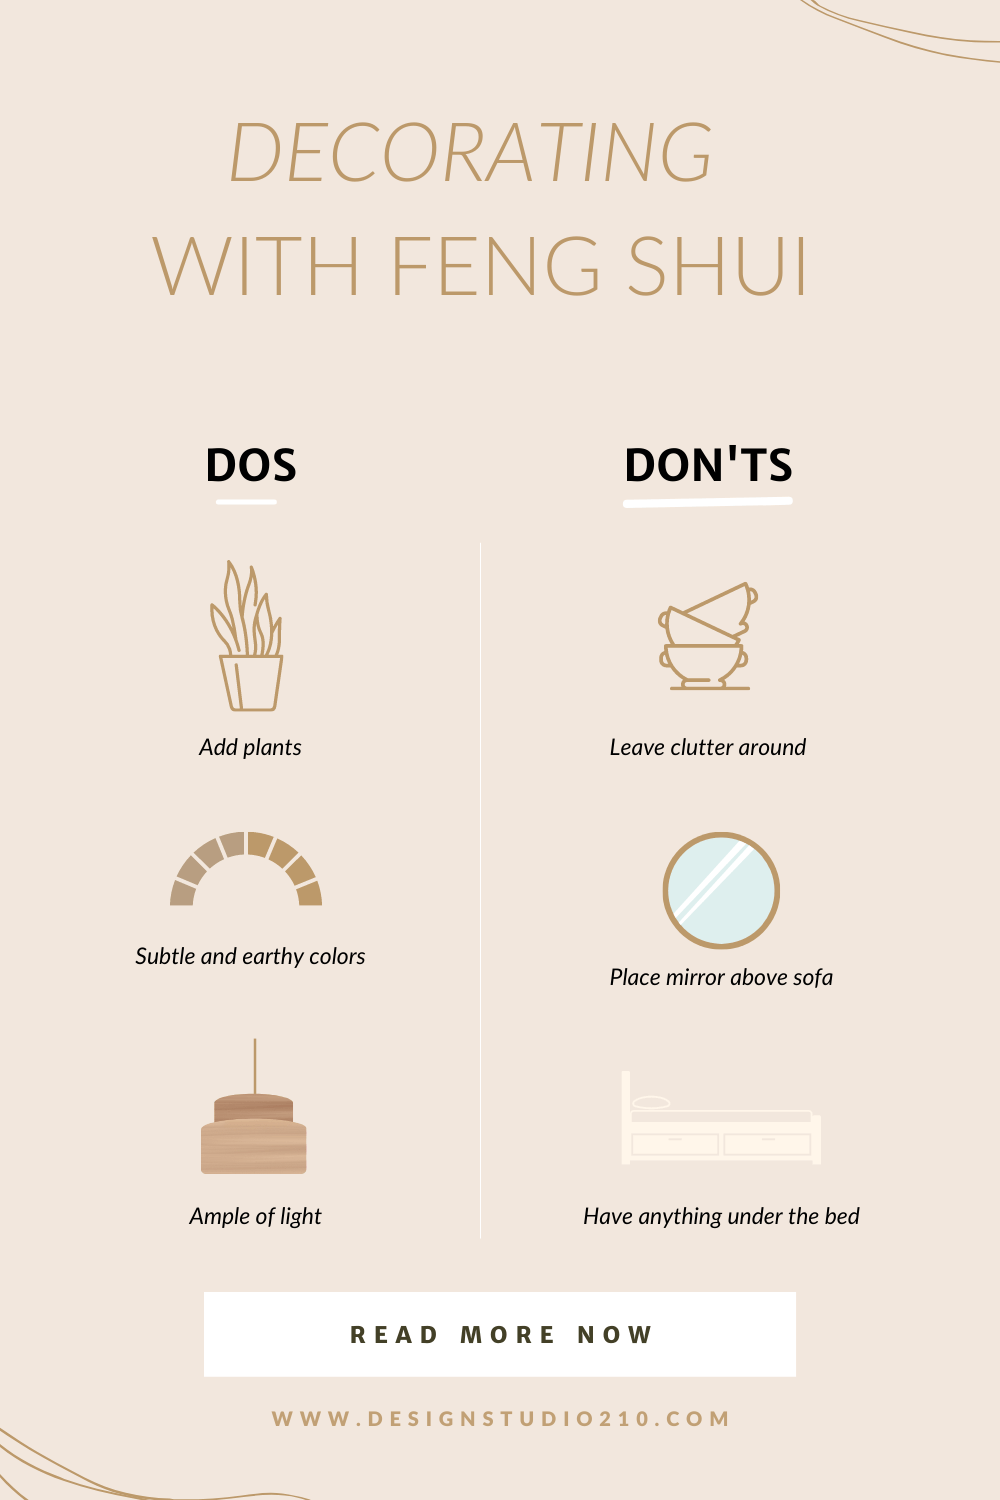 11 Feng Shui Living Room Tips - Feng Shui Living Room Dos and Don'ts